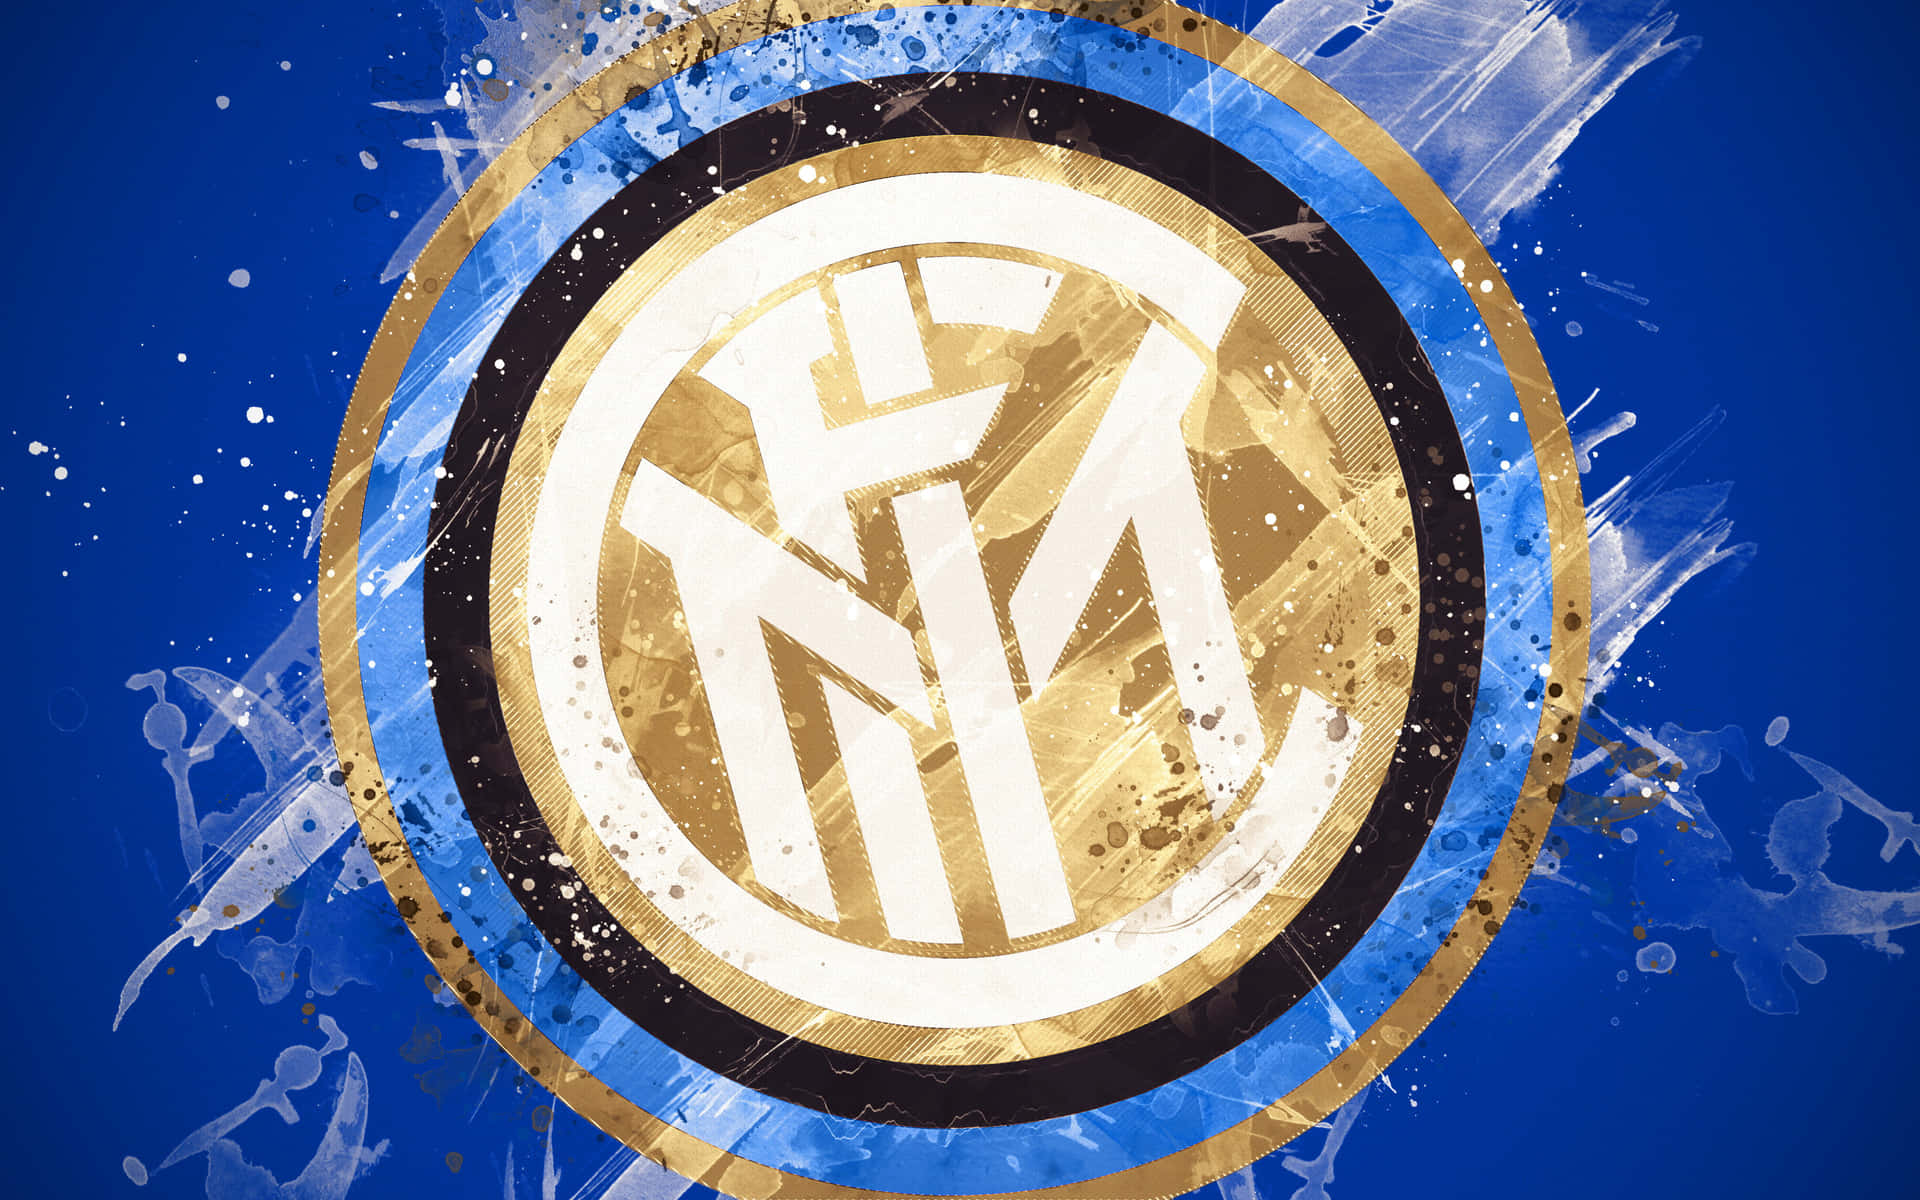 Caption: Inter Milan 2021/2022 Official Team Photo Wallpaper